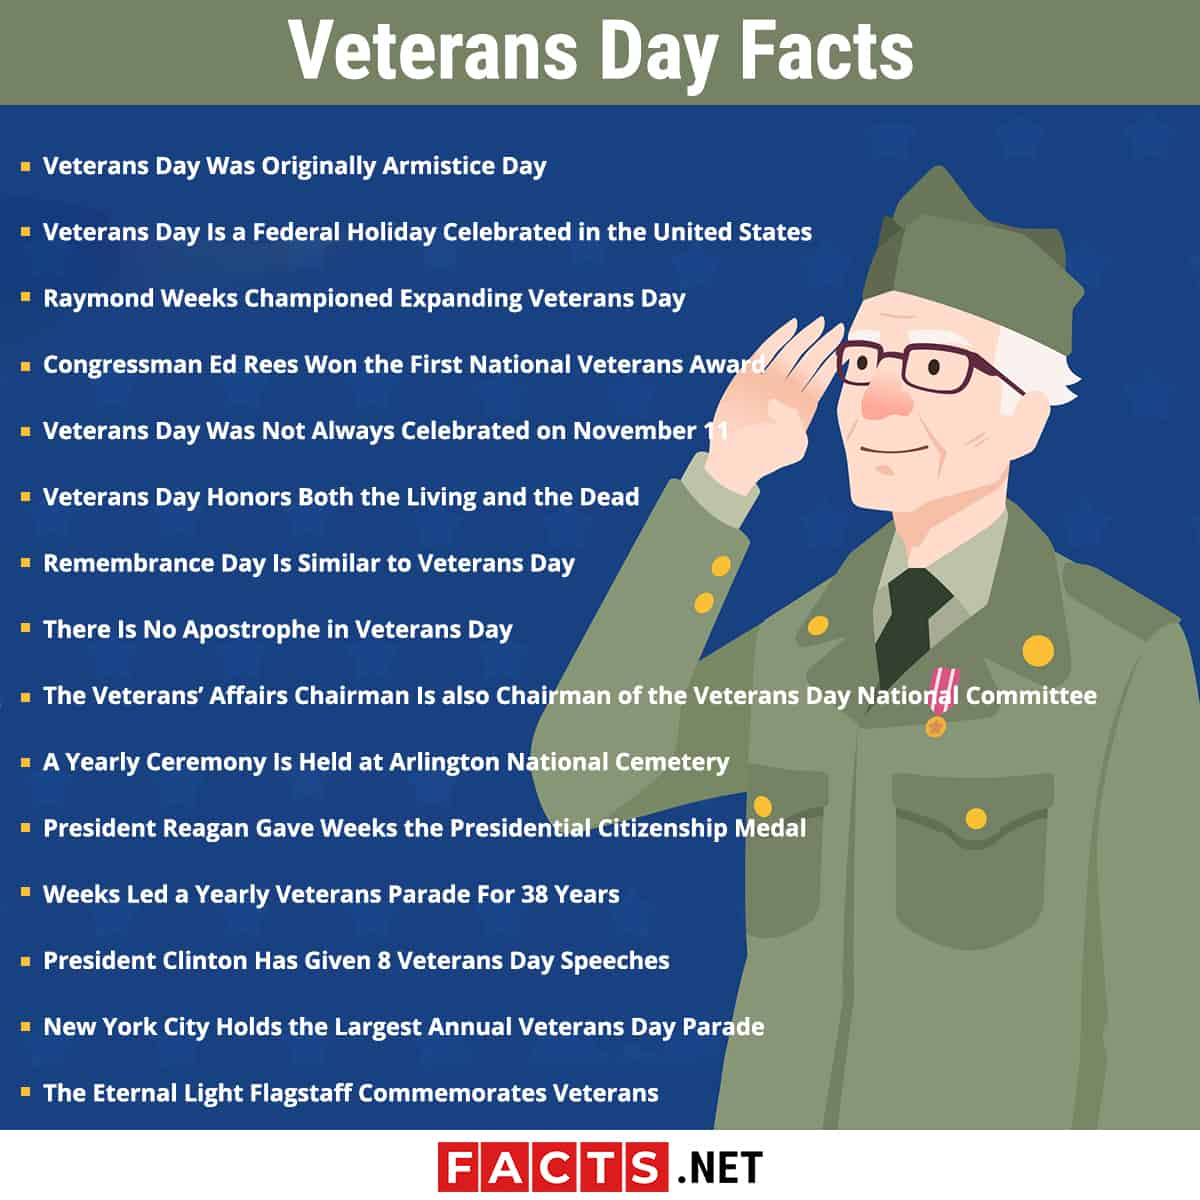 15 Veterans Day Facts History, Culture, Politics & More